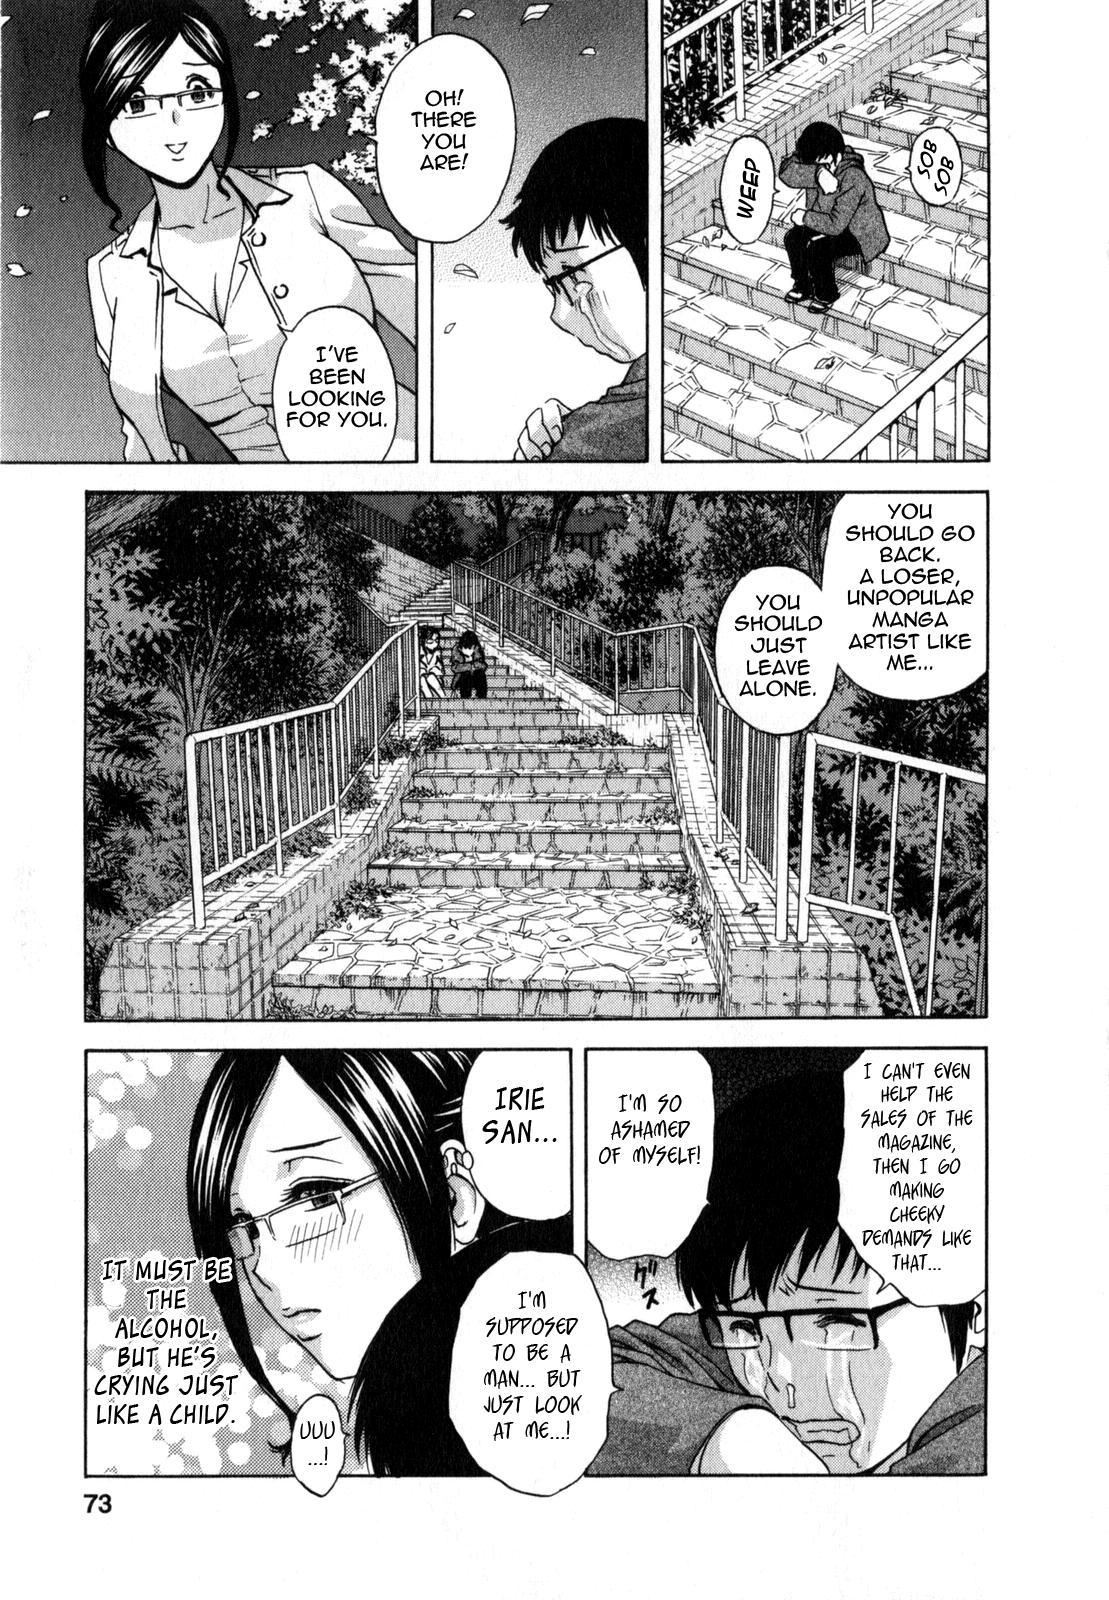 [Hidemaru] Life with Married Women Just Like a Manga 2 - Ch. 1-5 [English] {Tadanohito} 75